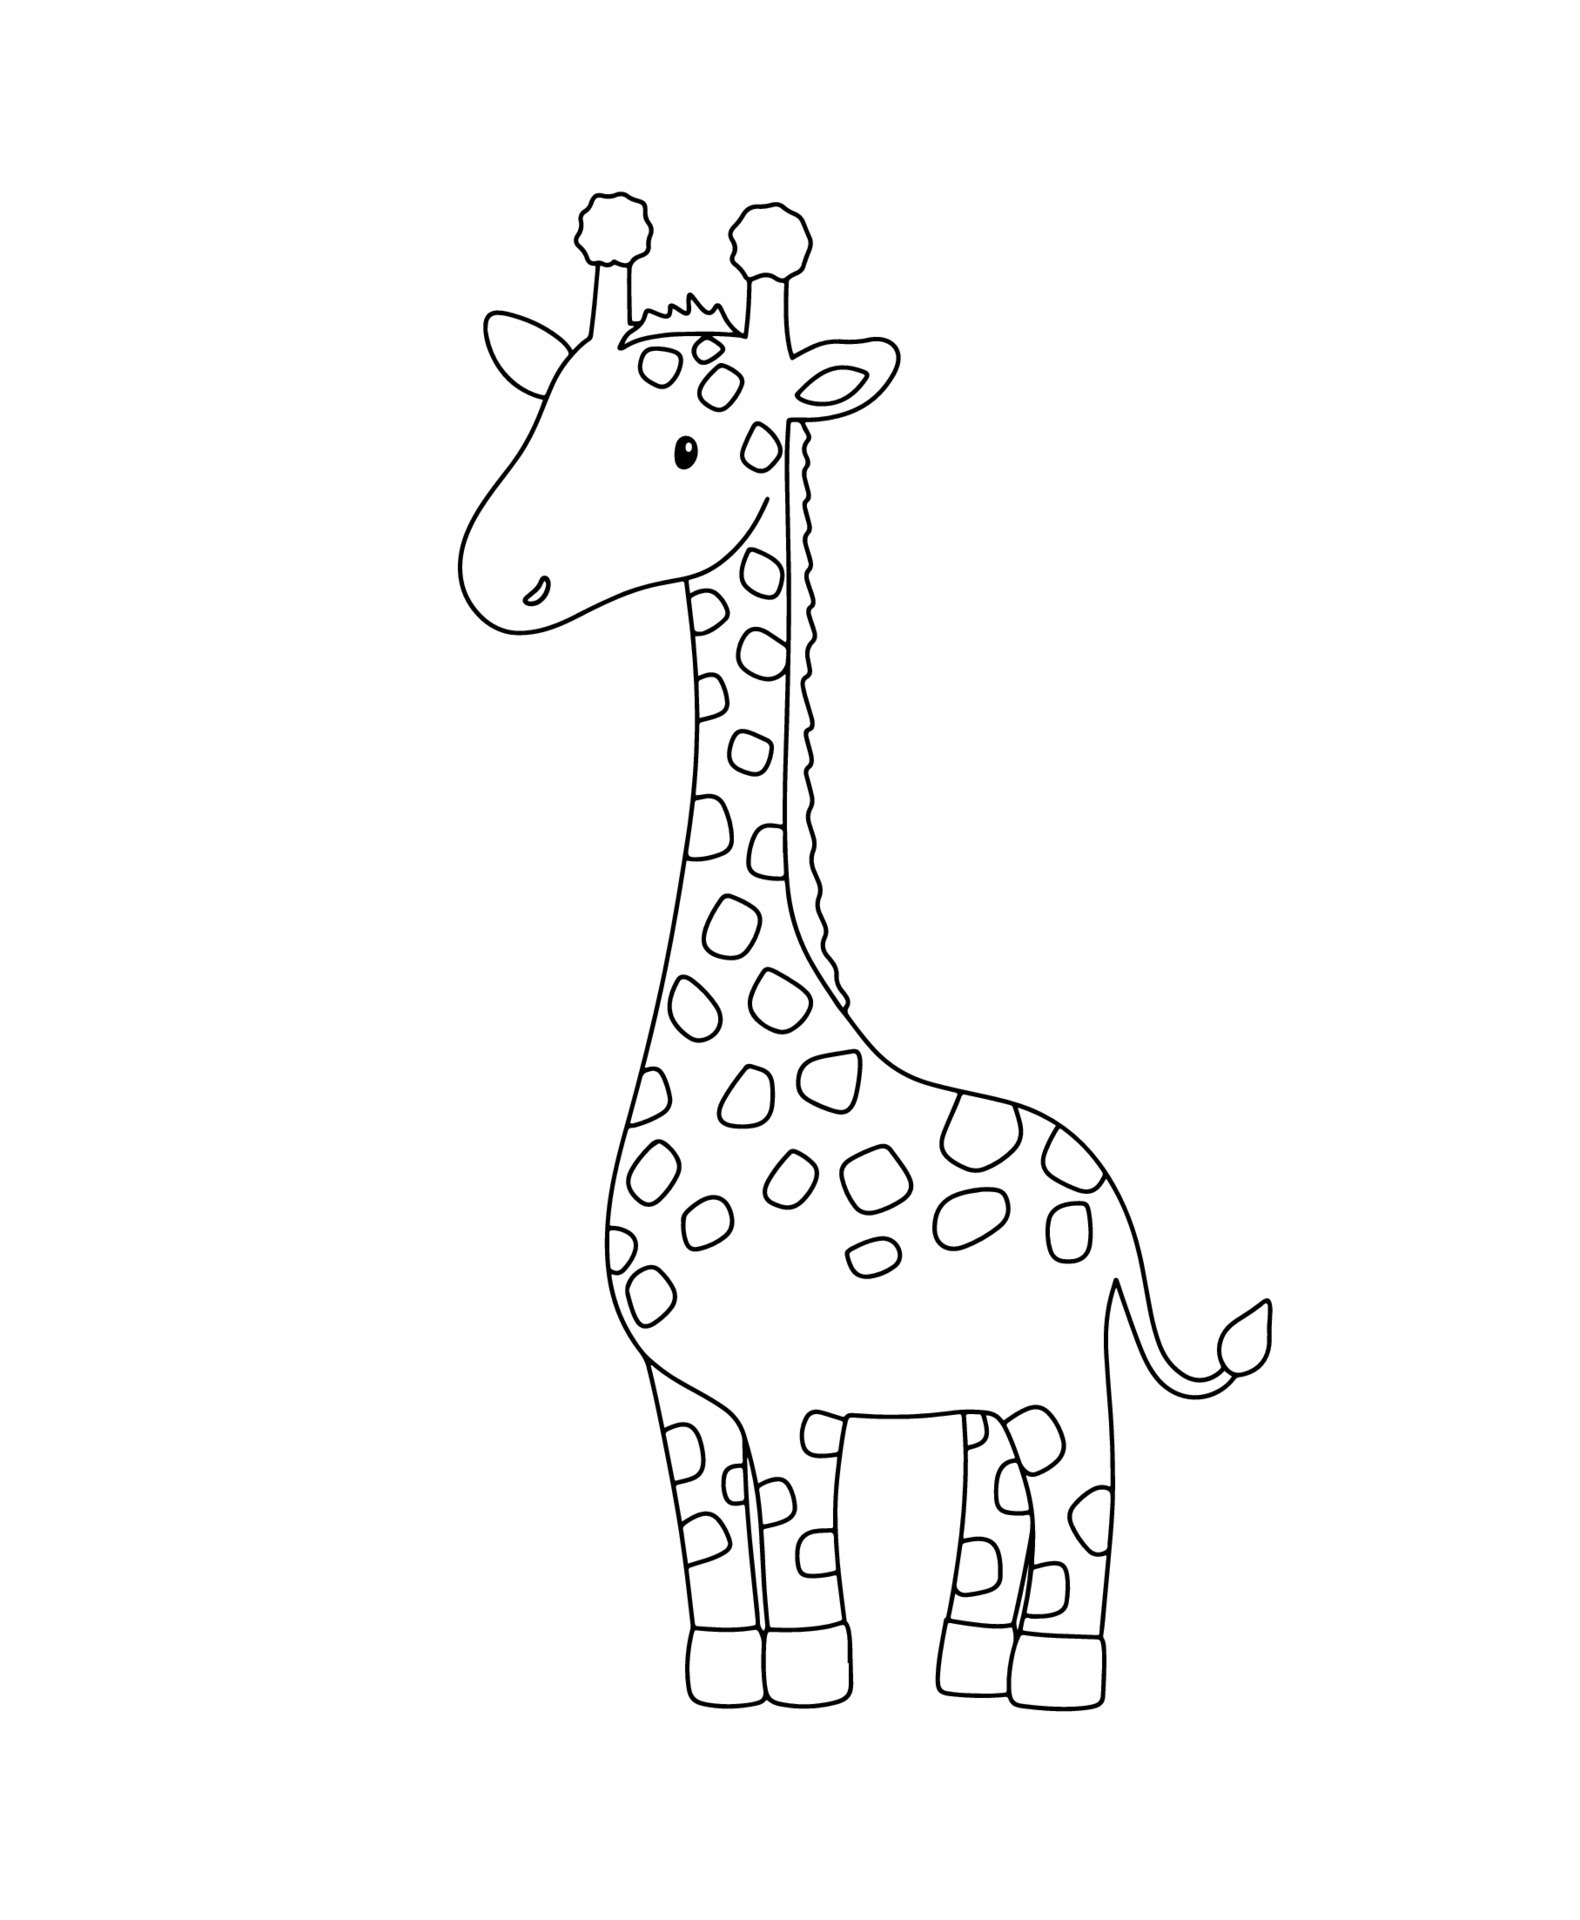 The Giraffe Sketch – Plaay